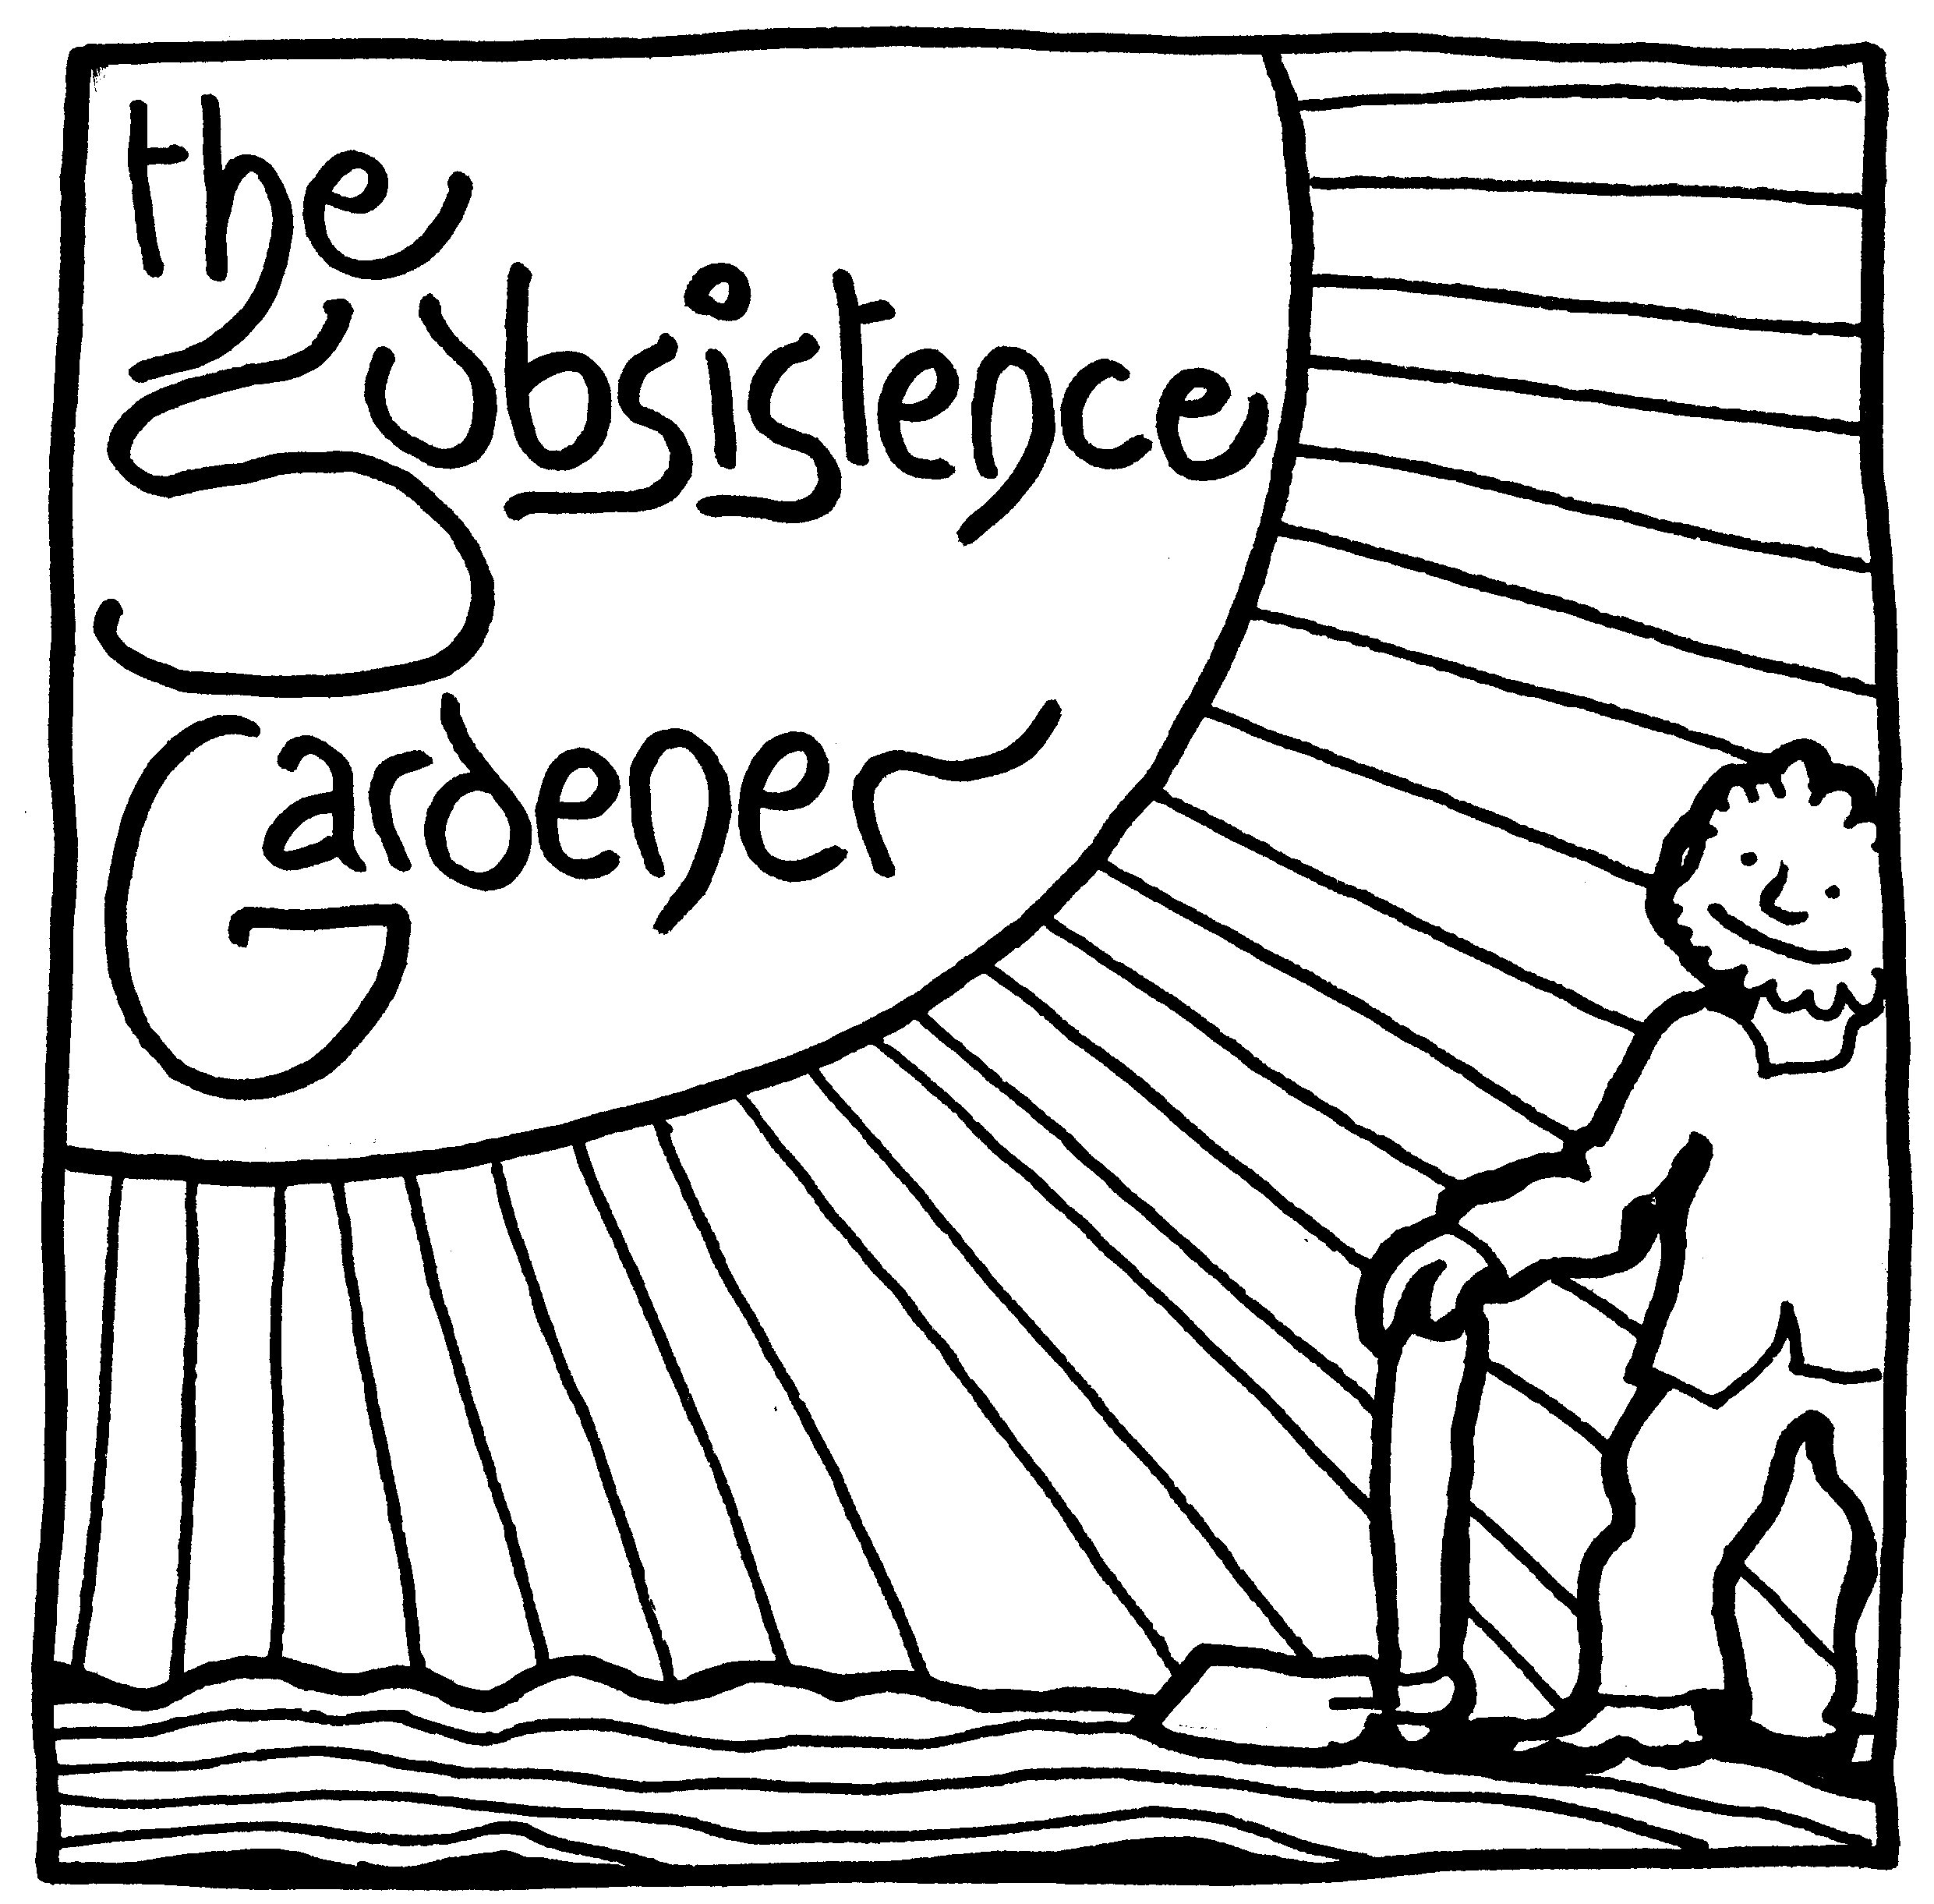 The Subsistence Gardener